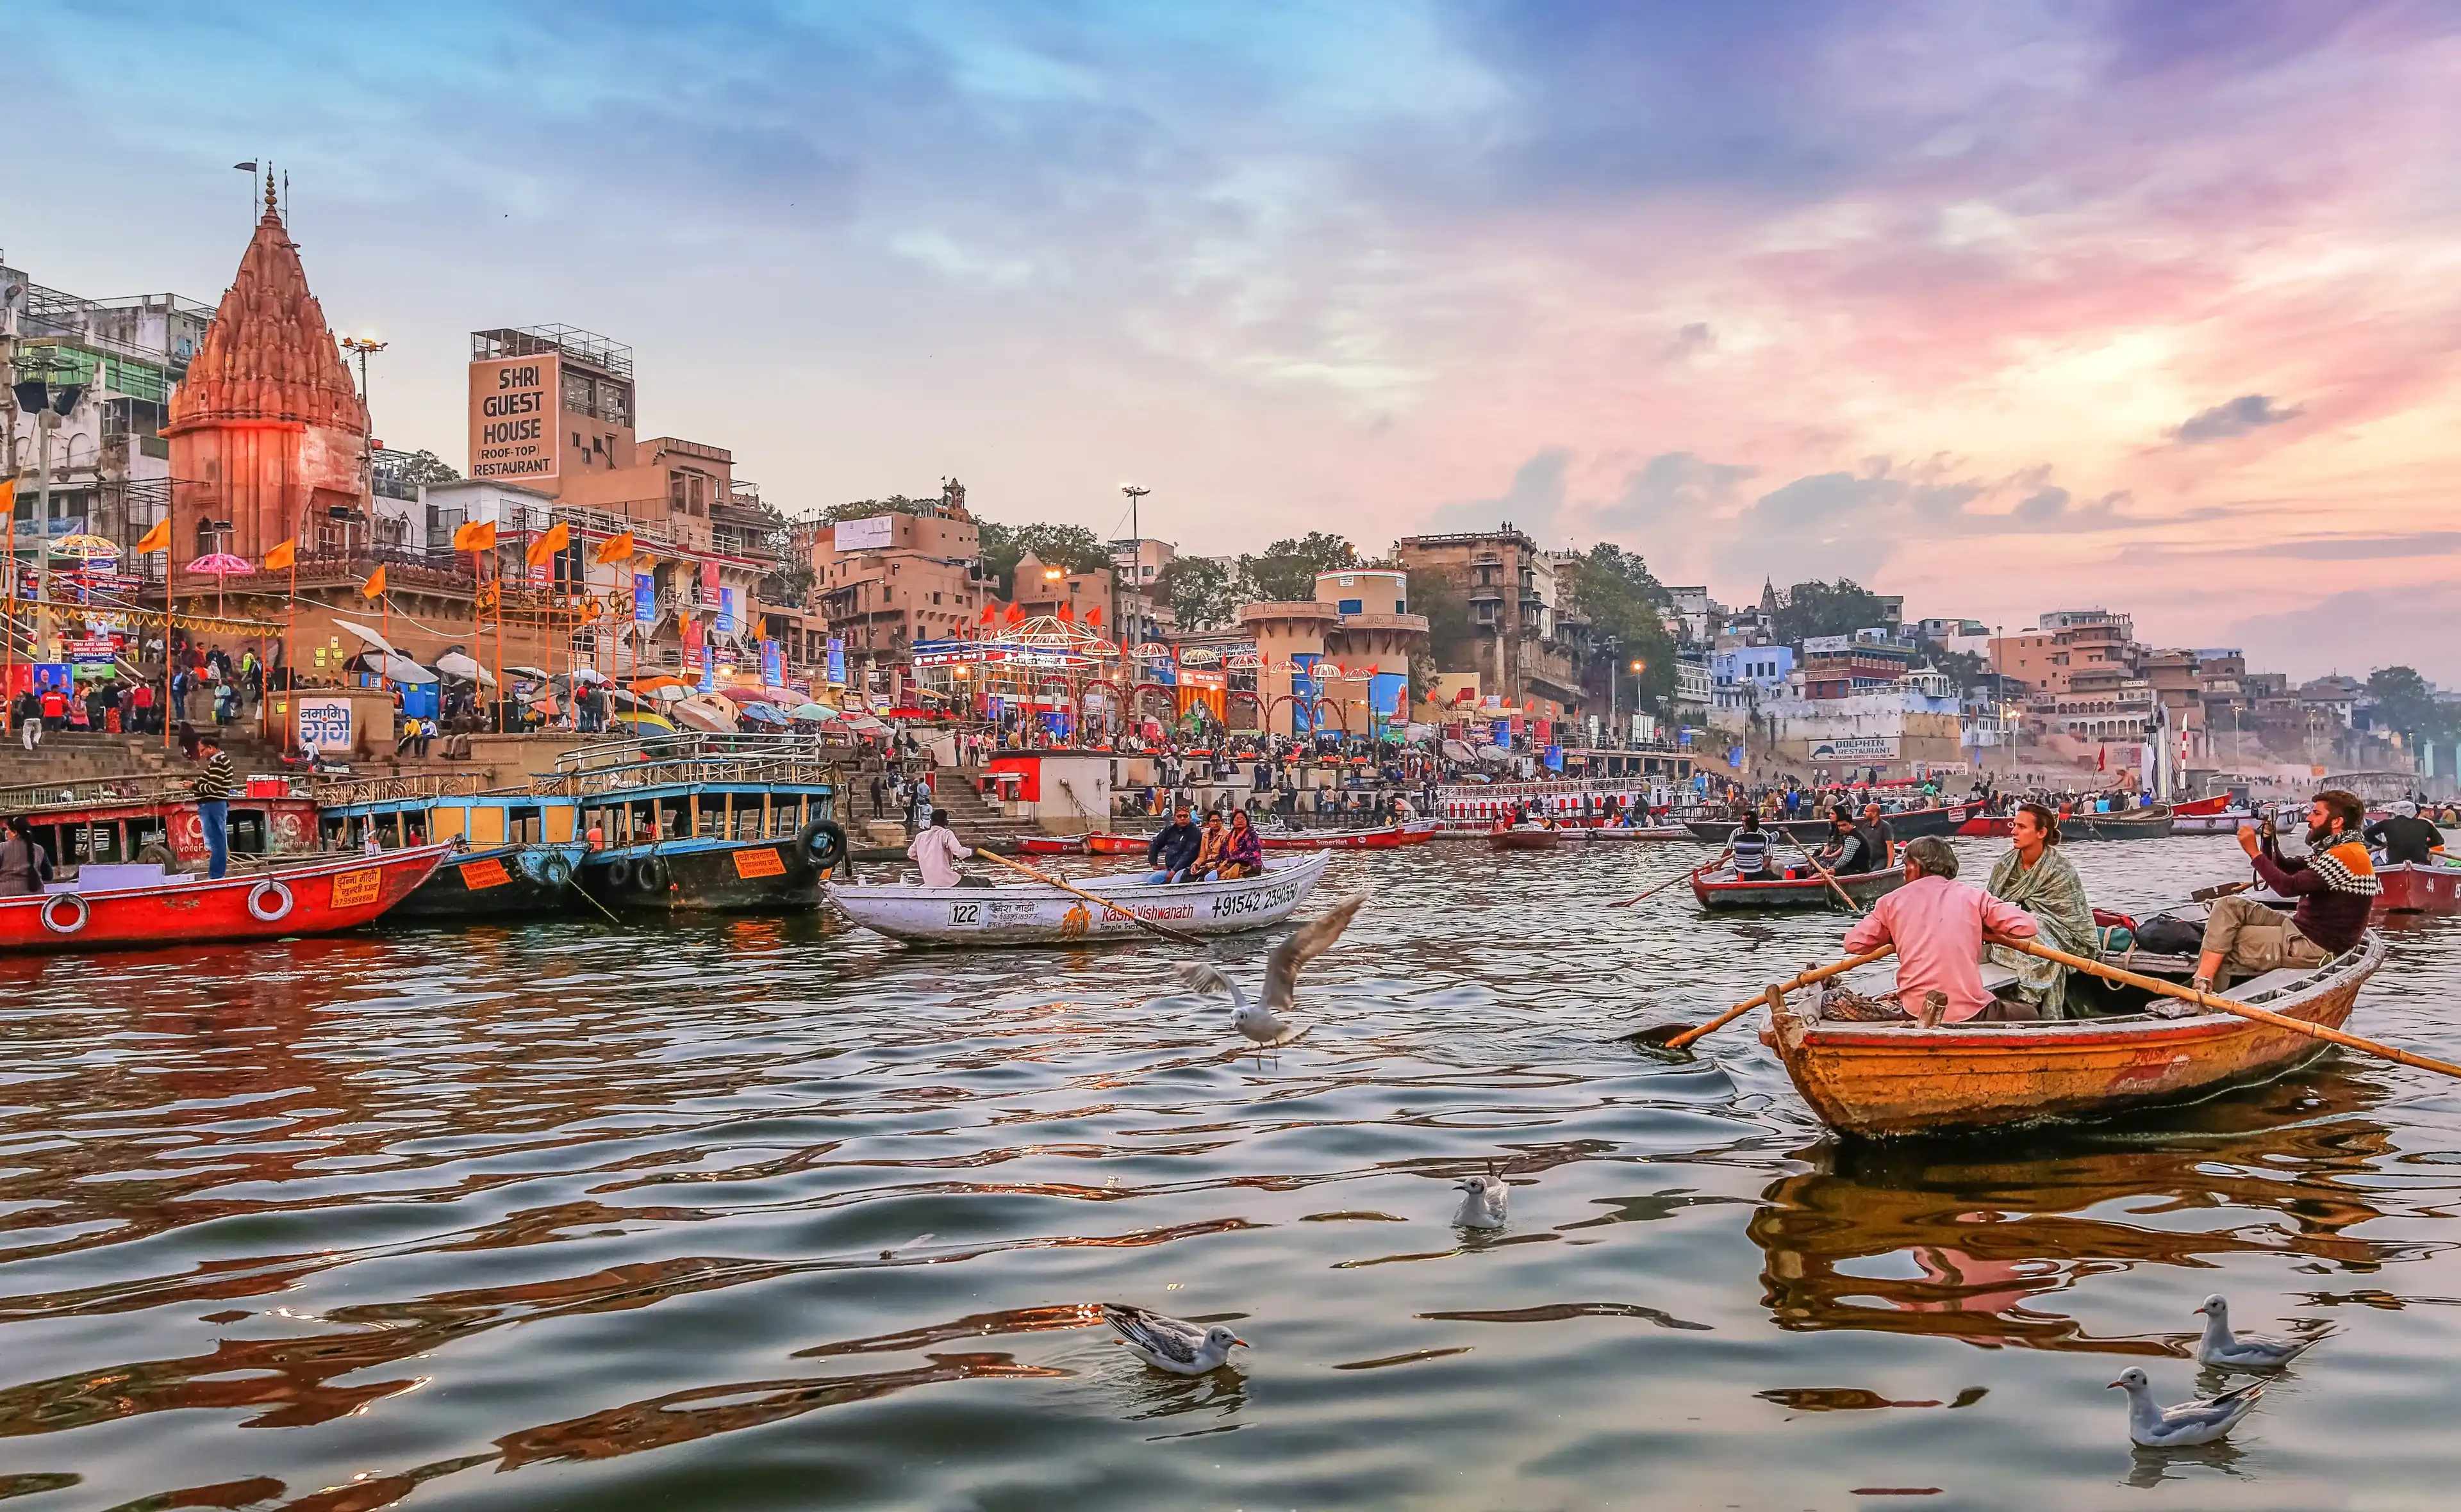 Varanasi, India, January 23,2019: Dashaswamedh Ganges river ghat Varanasi at twilight with tourists enjoying boating rides